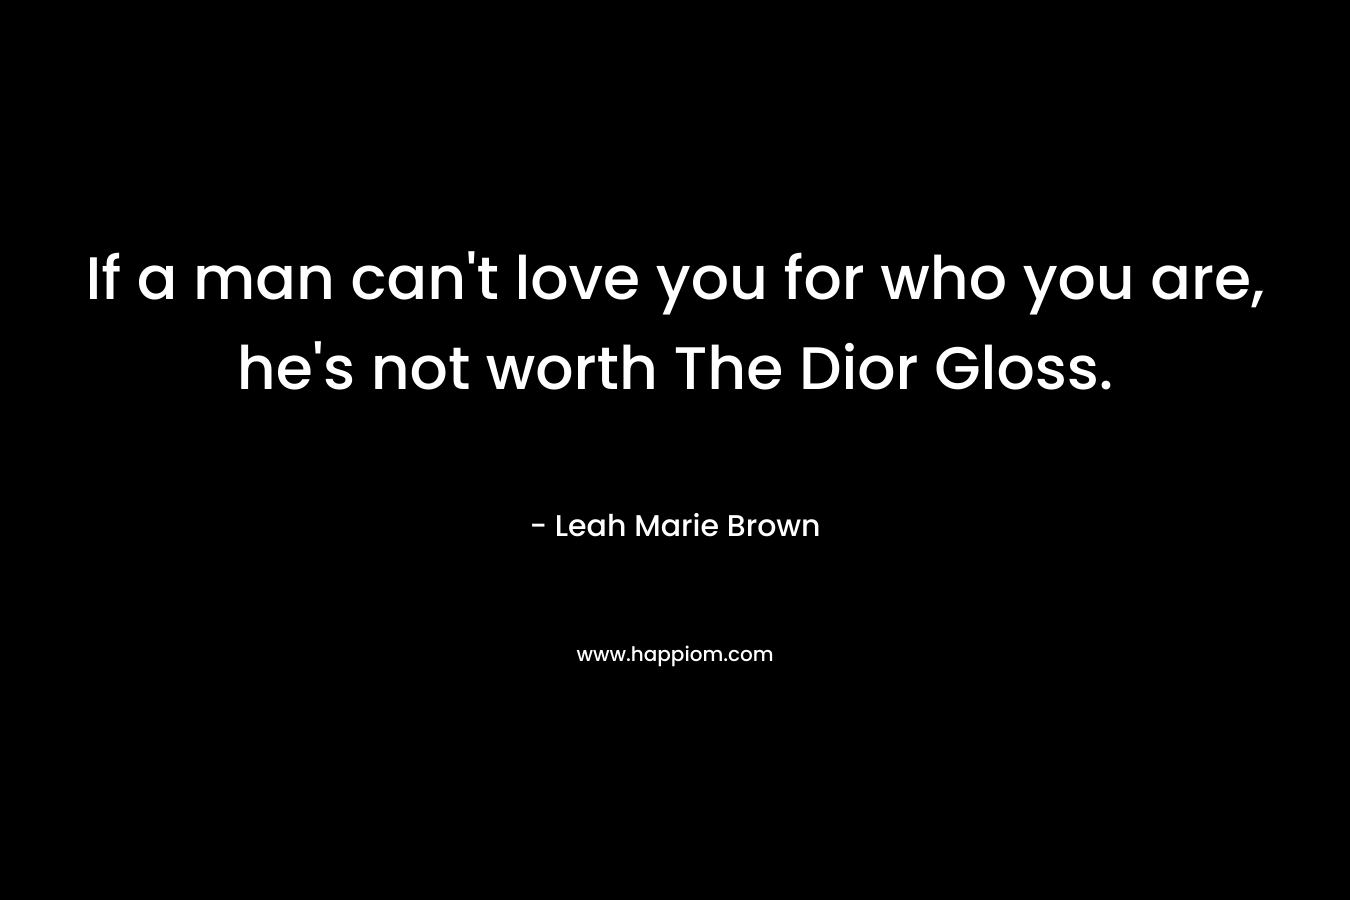 If a man can’t love you for who you are, he’s not worth The Dior Gloss. – Leah Marie Brown